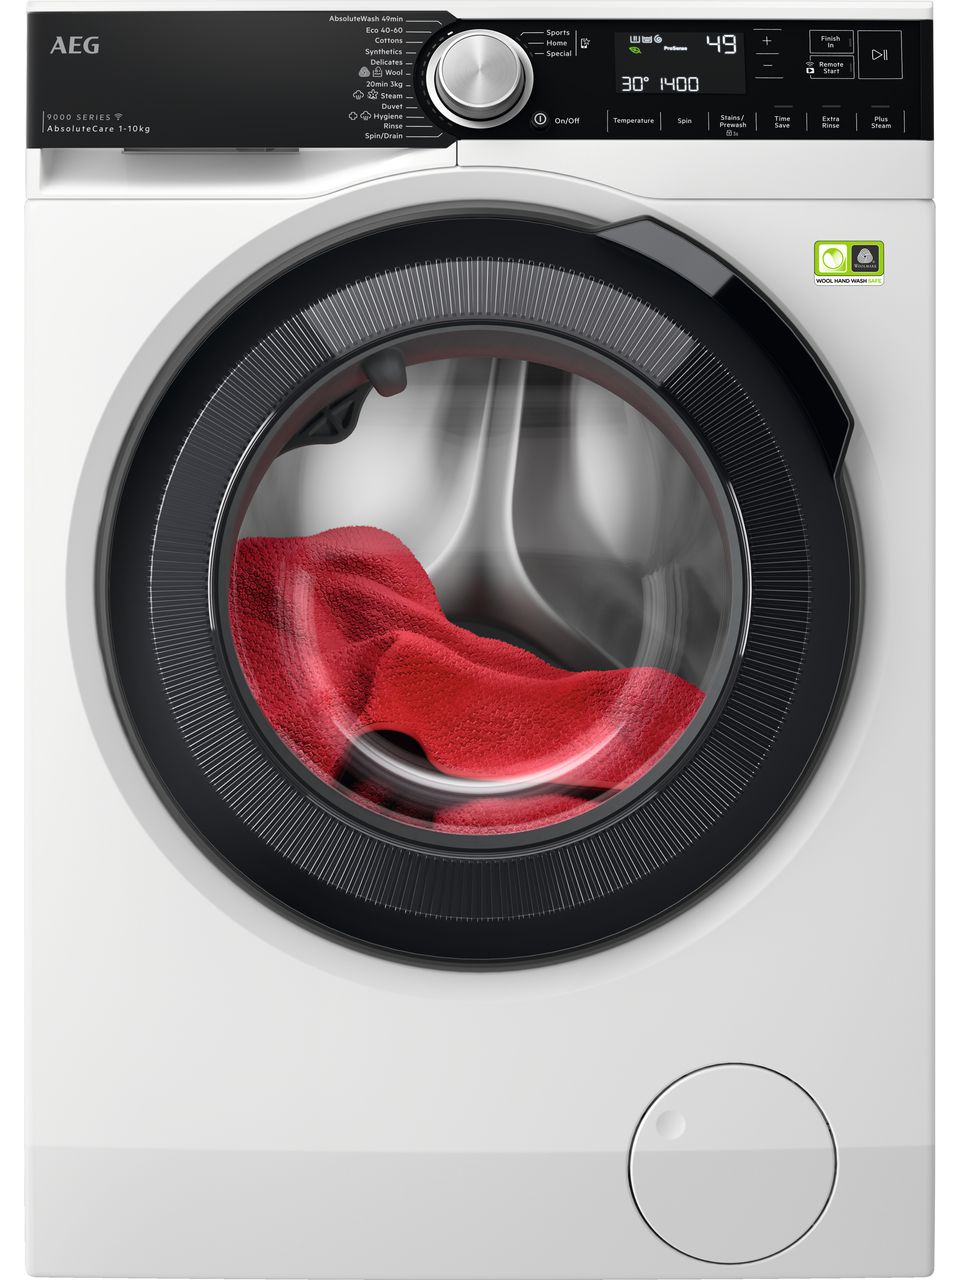 AEG 10kg washing machine, White, LFR95146WS_WH